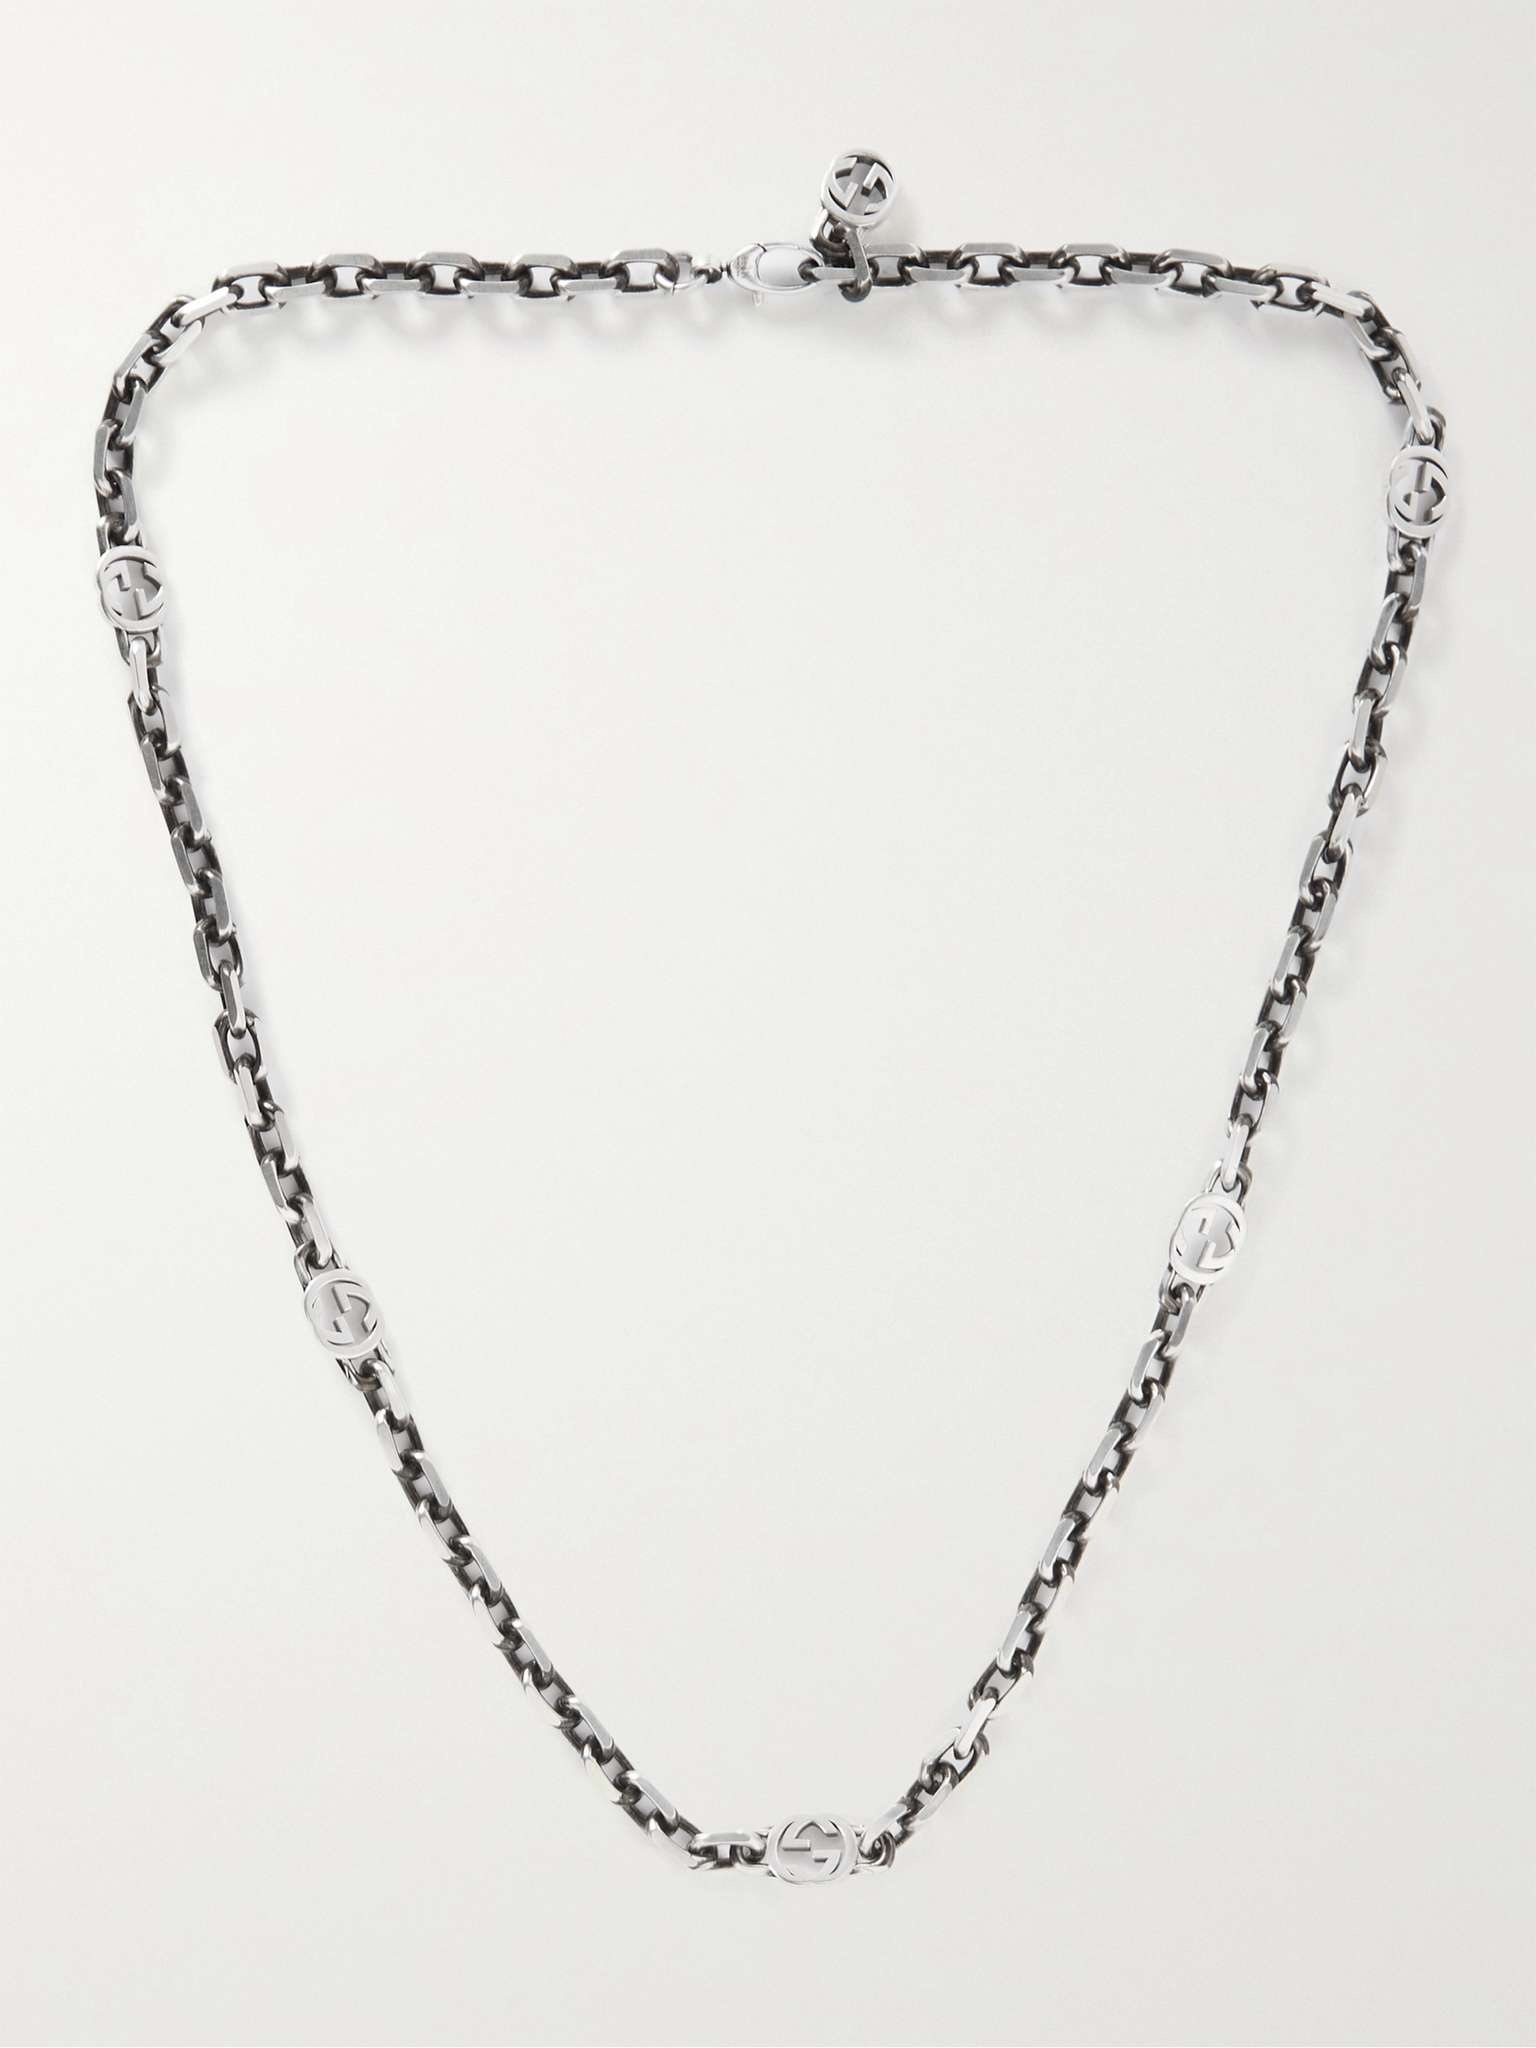 Burnished Sterling Silver Necklace - 1